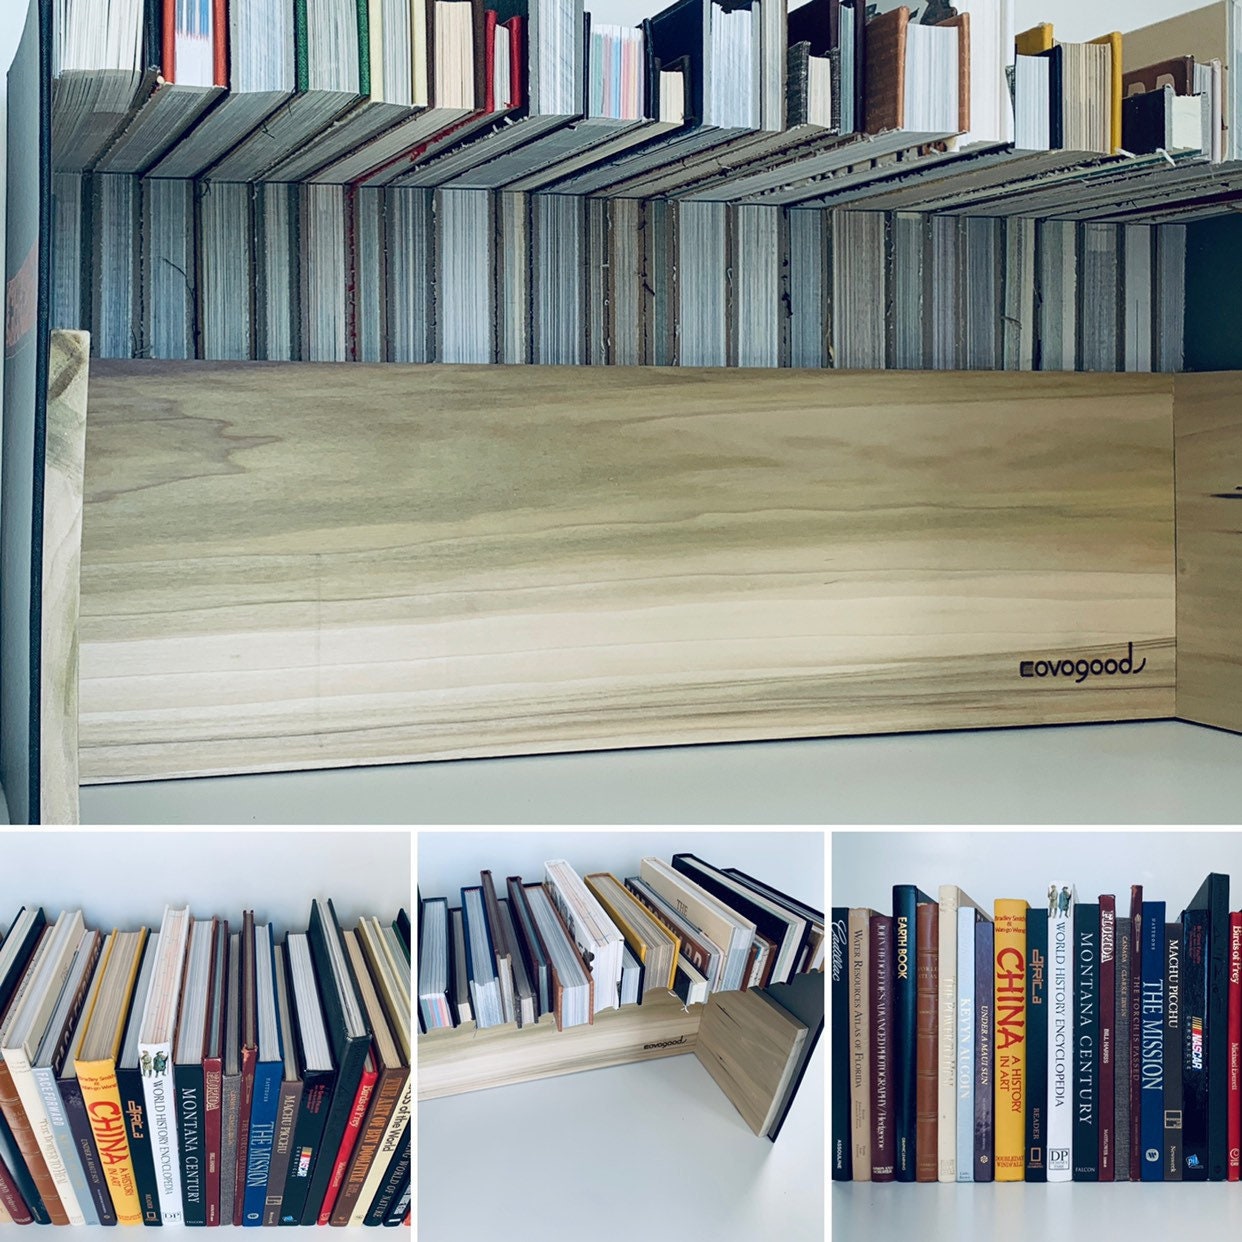 Tall CovoBox v2™ Hidden Storage made w/ Real Books | Etsy France